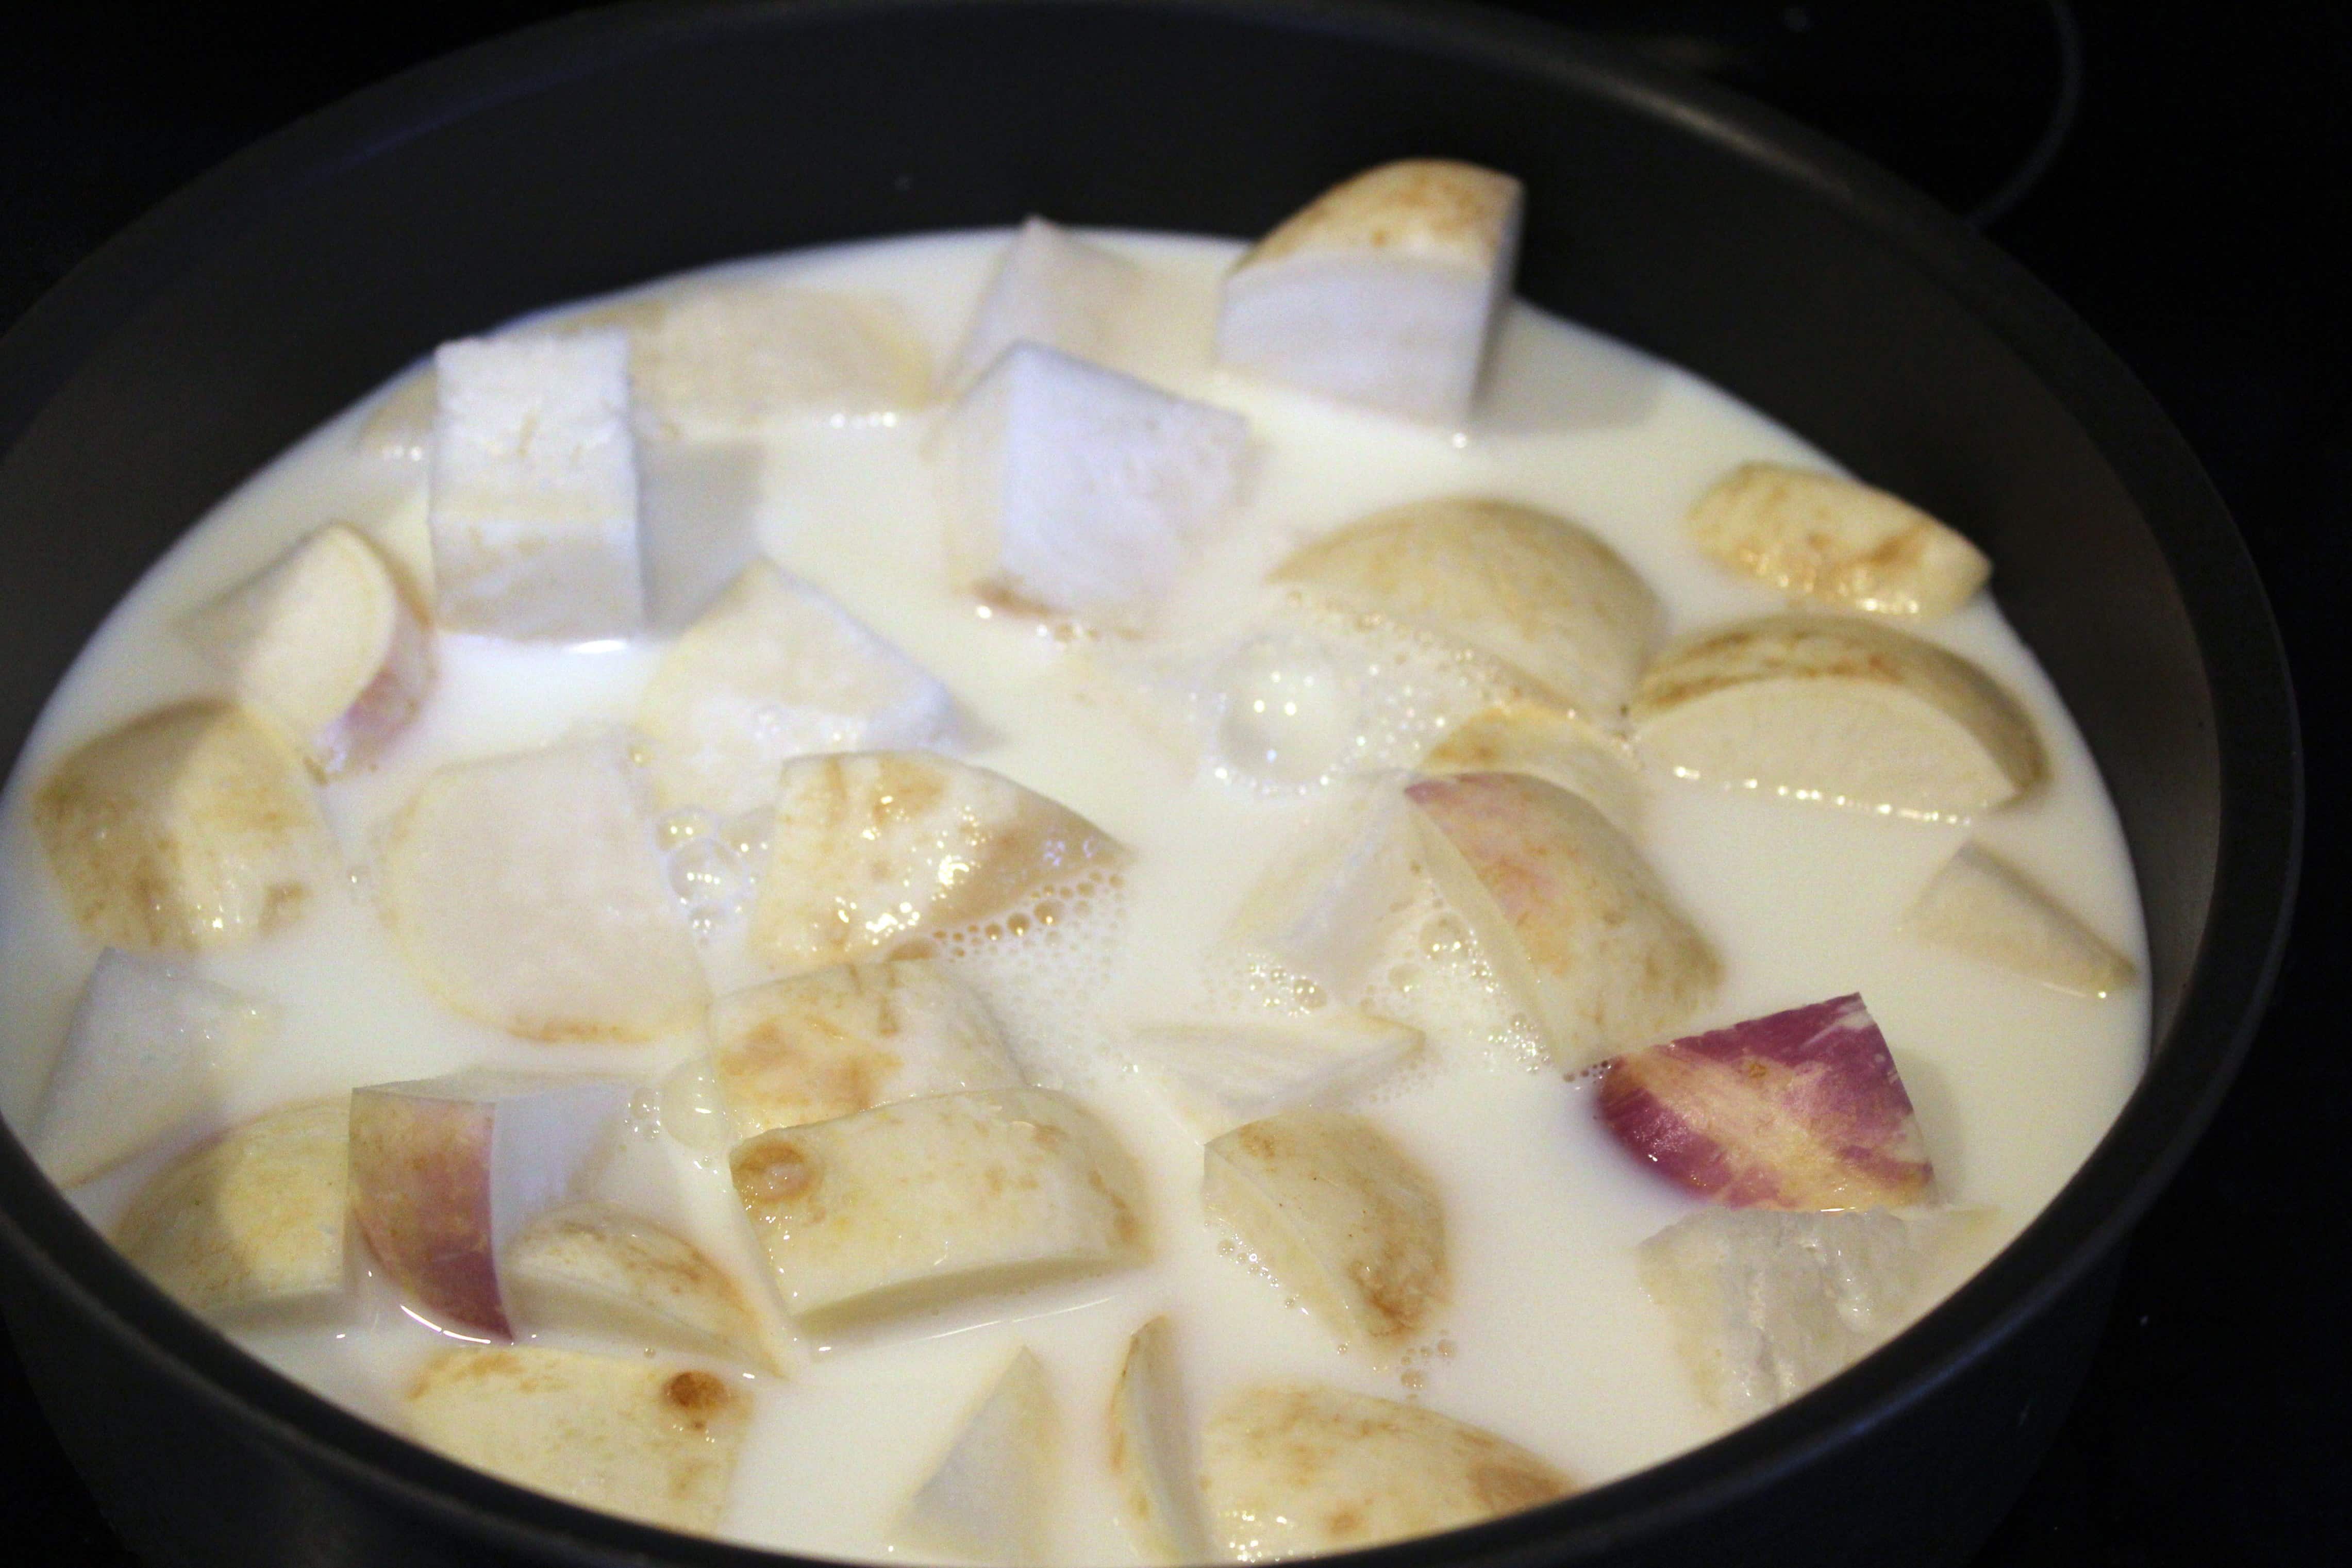 Add milk to turnips